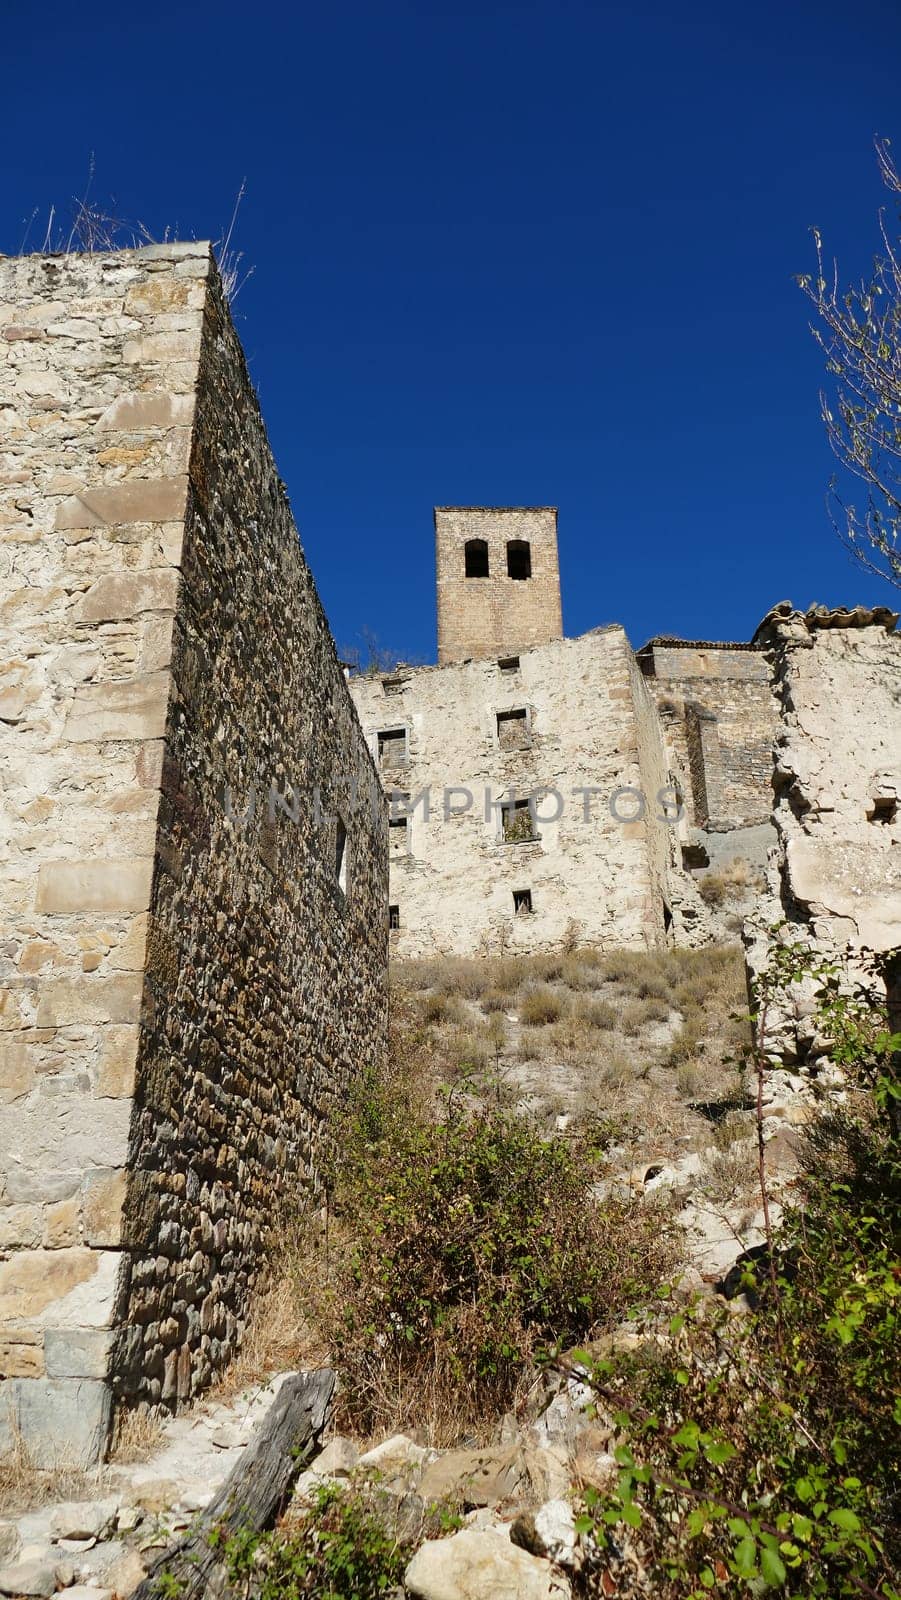 Church of an uninhabited village of Yesa in Navarre by XabiDonostia